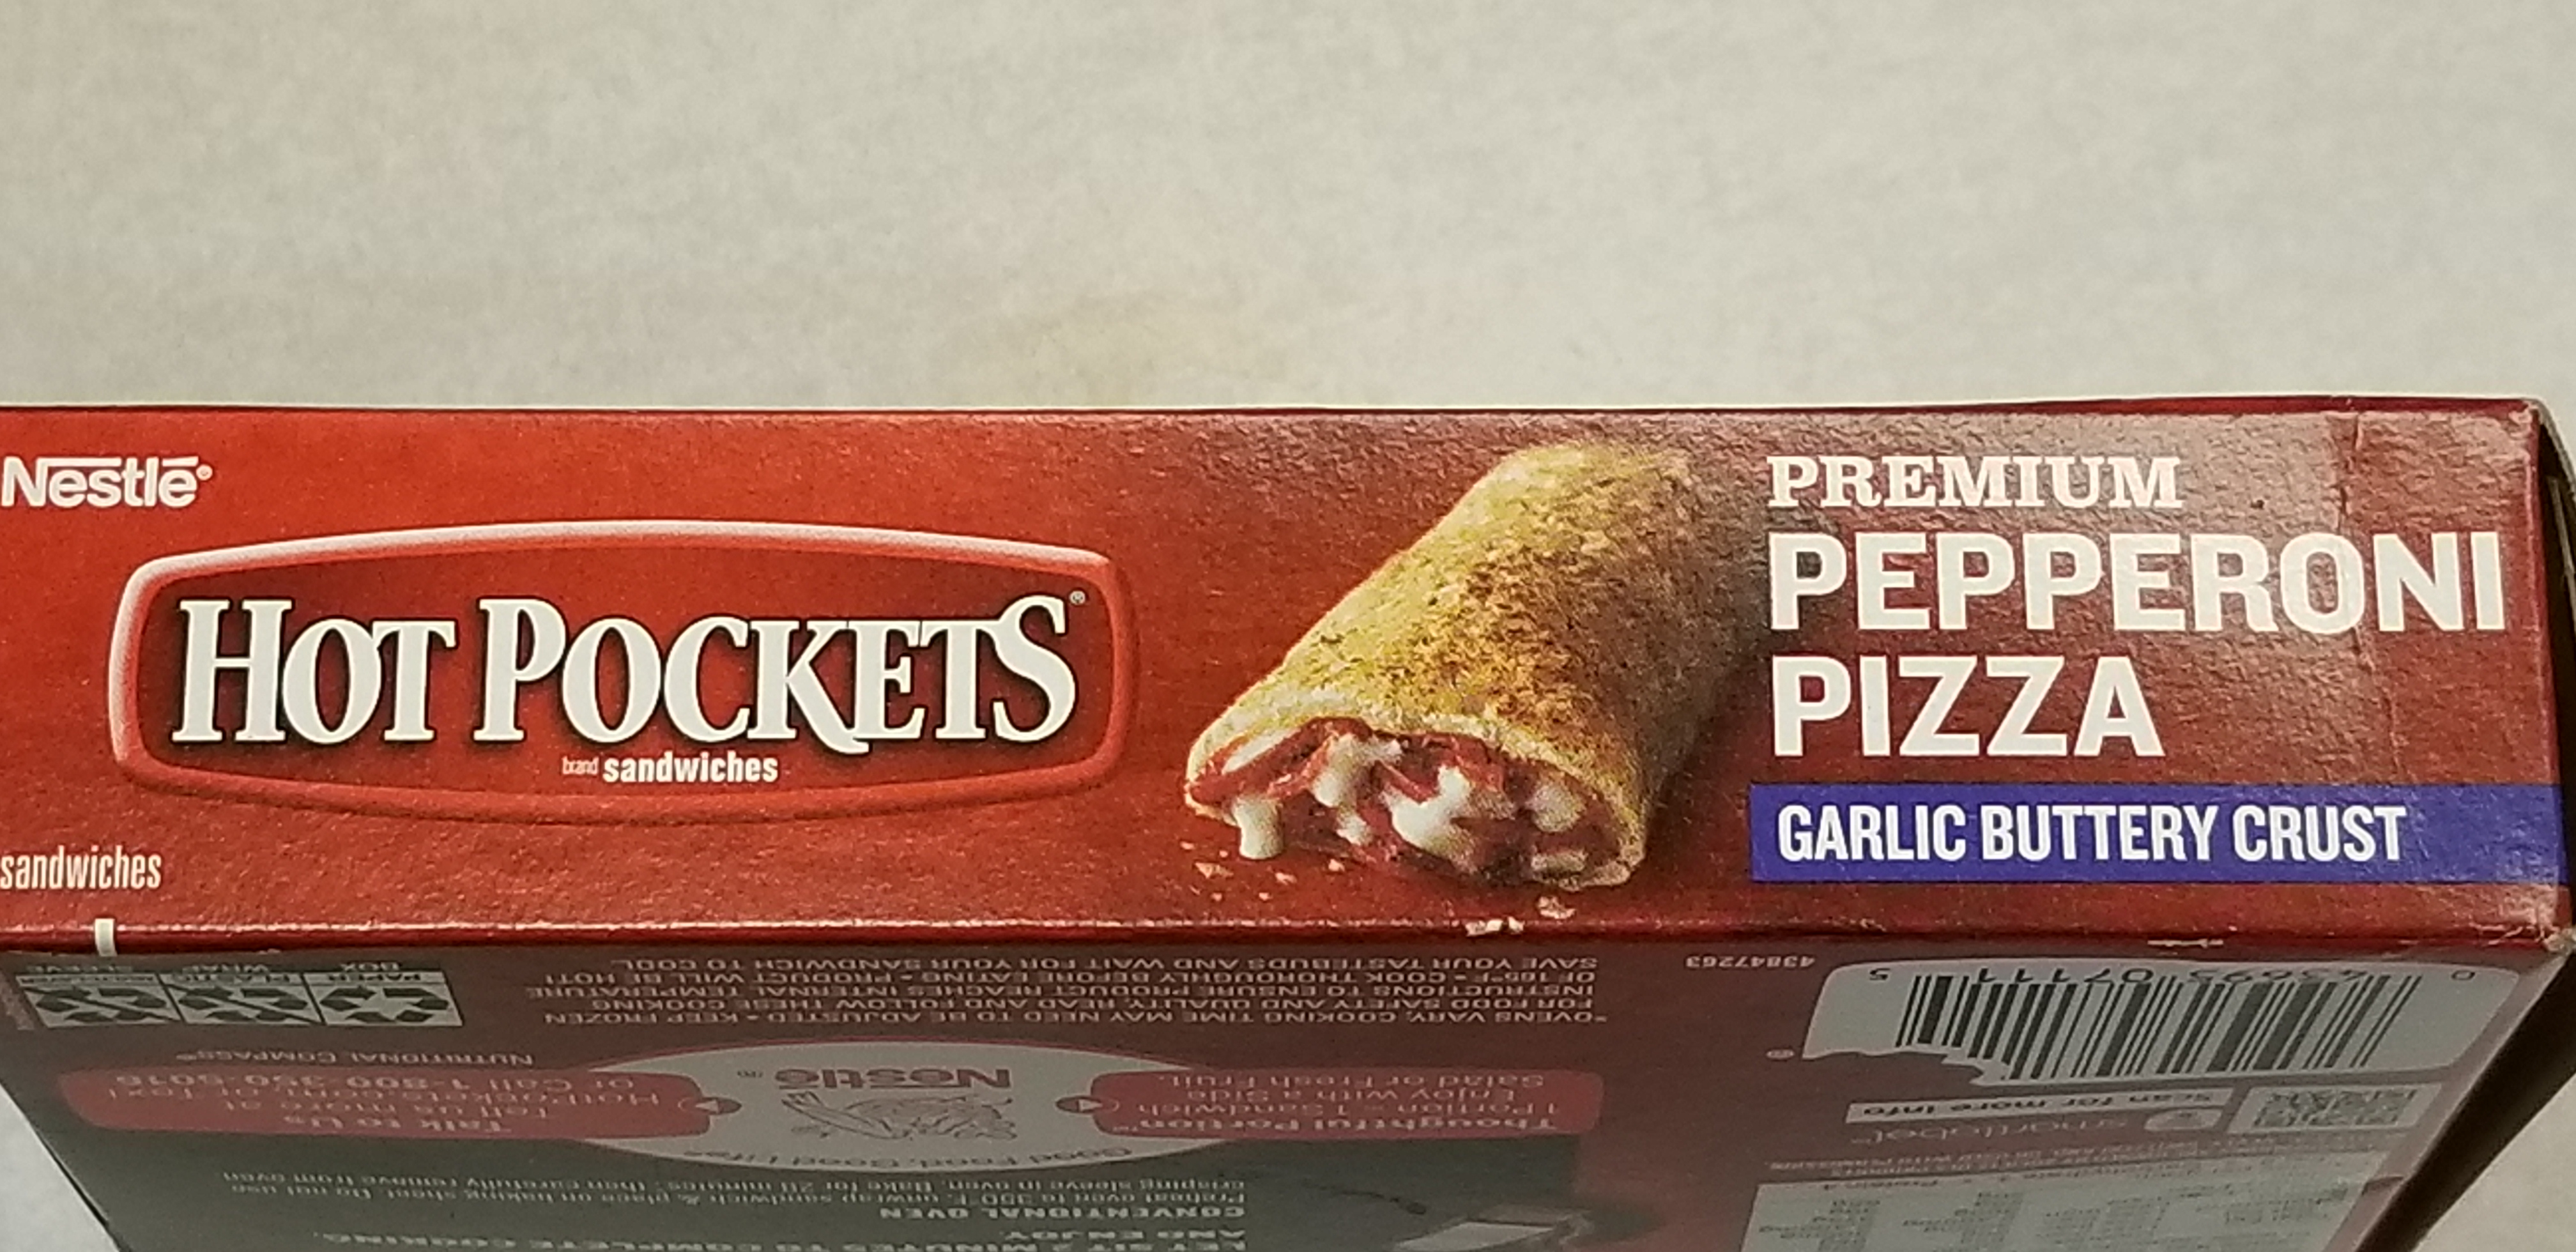 Hot Pockets Premium Pepperoni Pizza Side of Box